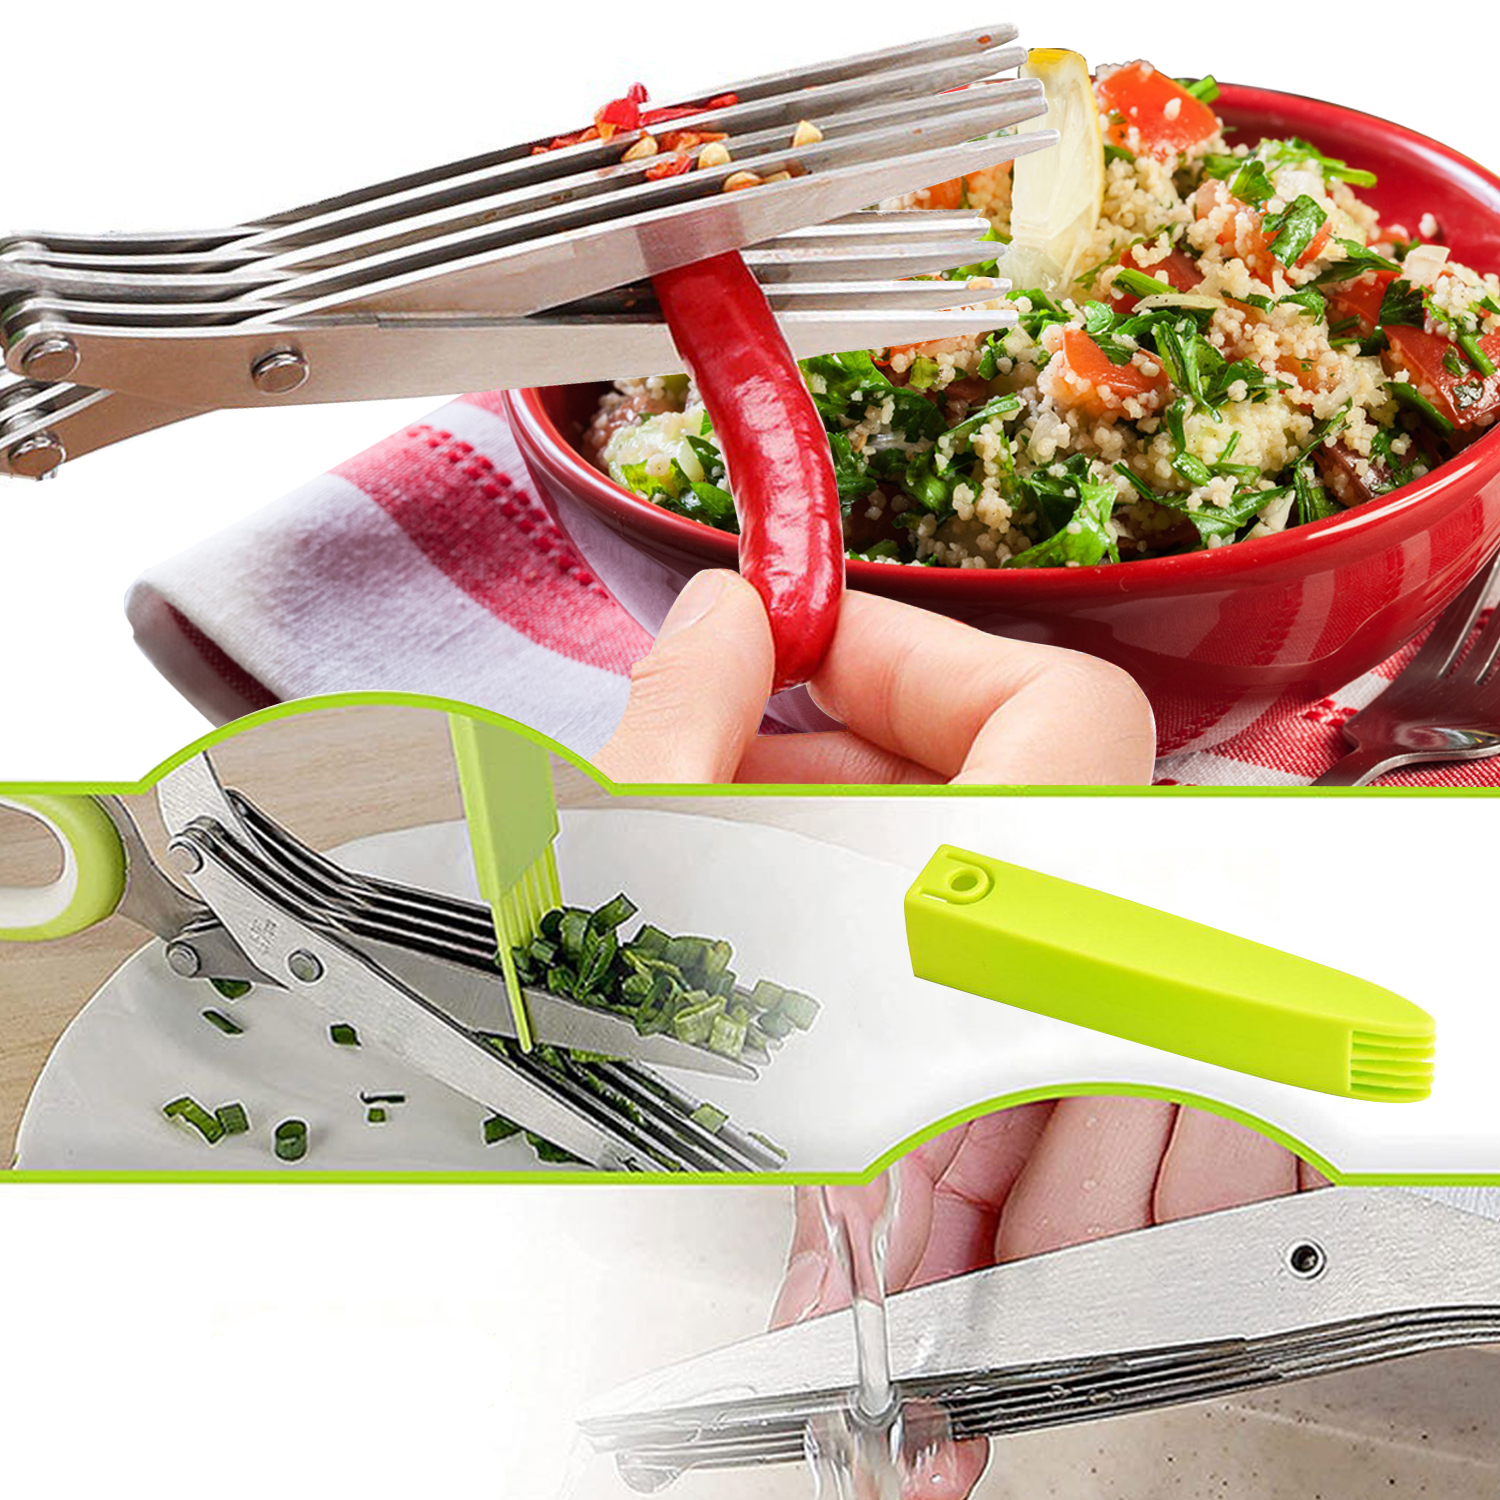 5 Blade Kitchen Salad Scissors, Herb Scissors, Muti Layers Stainless Steel Vegetable Cutting Tool, Kitchen Cutting Scissors with Safety Cover